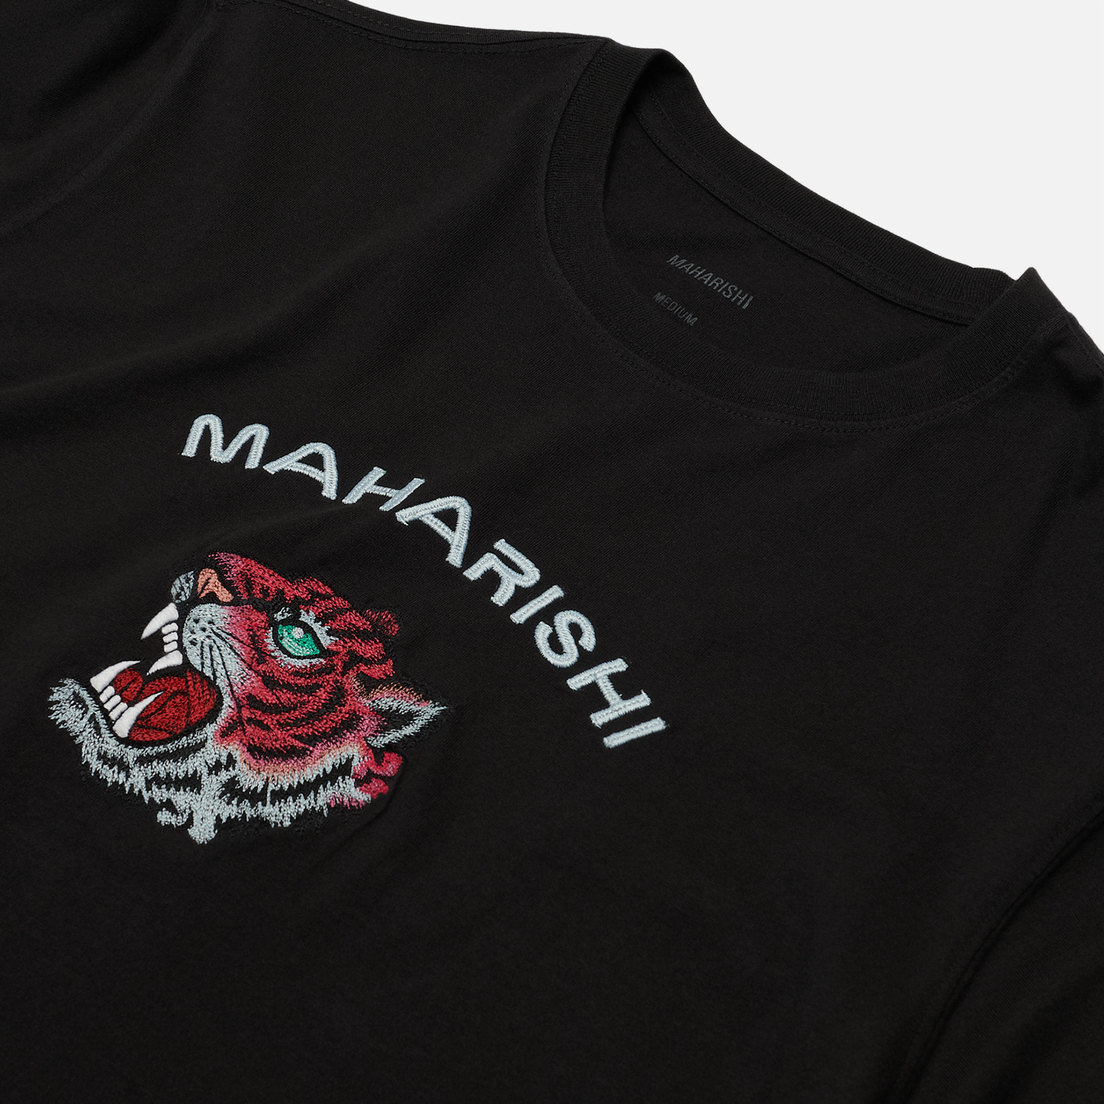 maharishi Мужская футболка Tiger Invasion